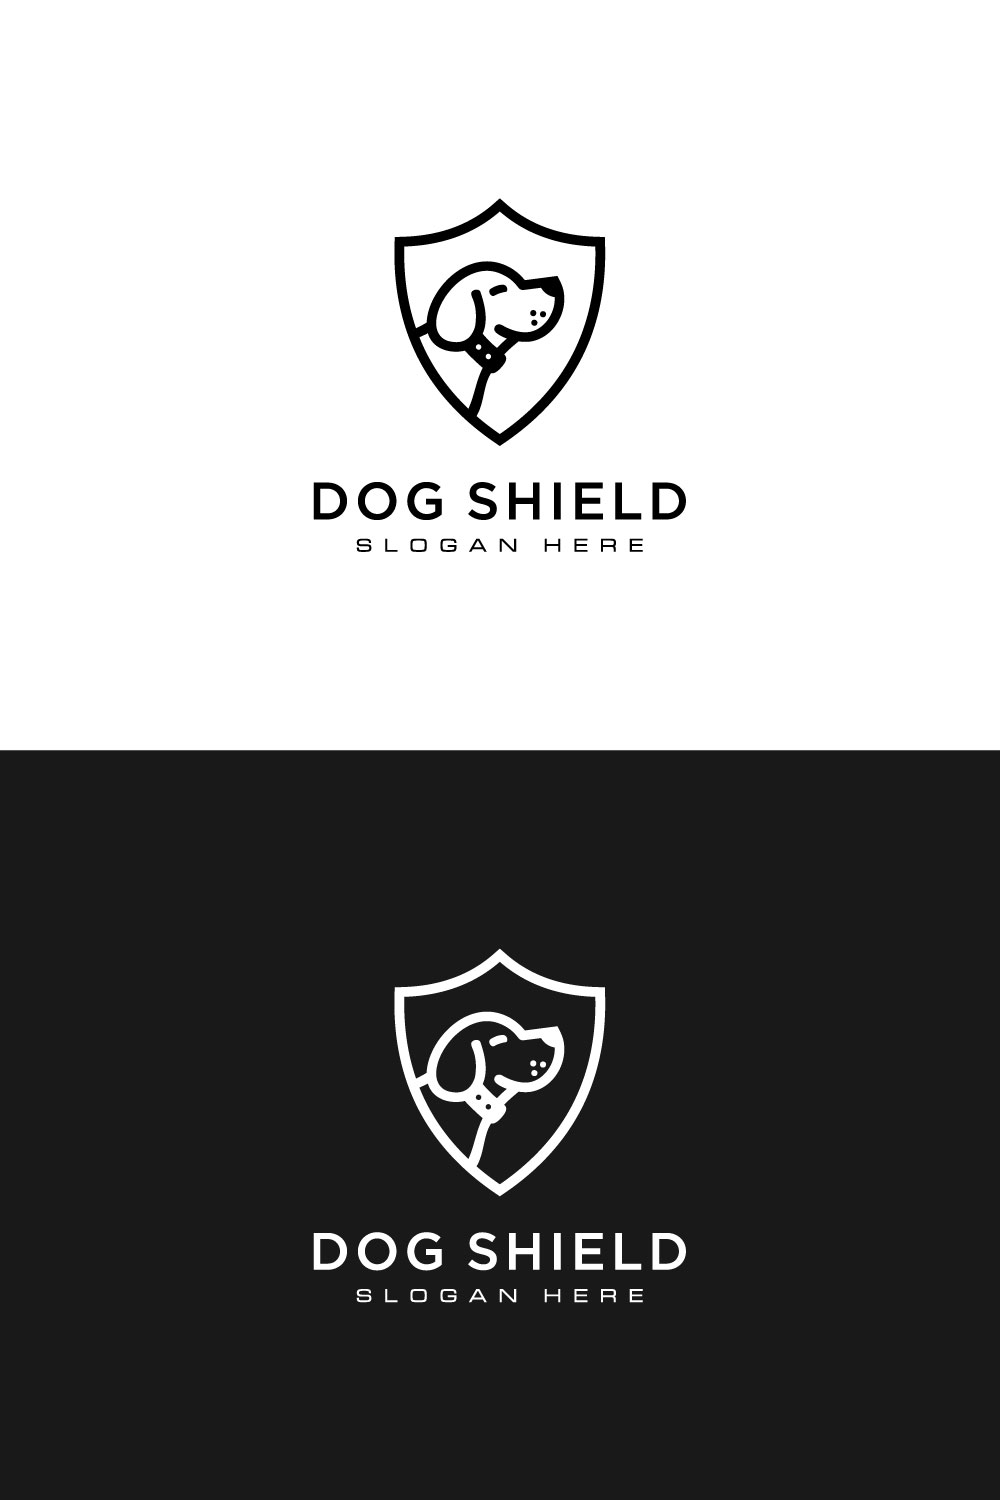 Dog Shield Logo Vector Design Pinterest Image.